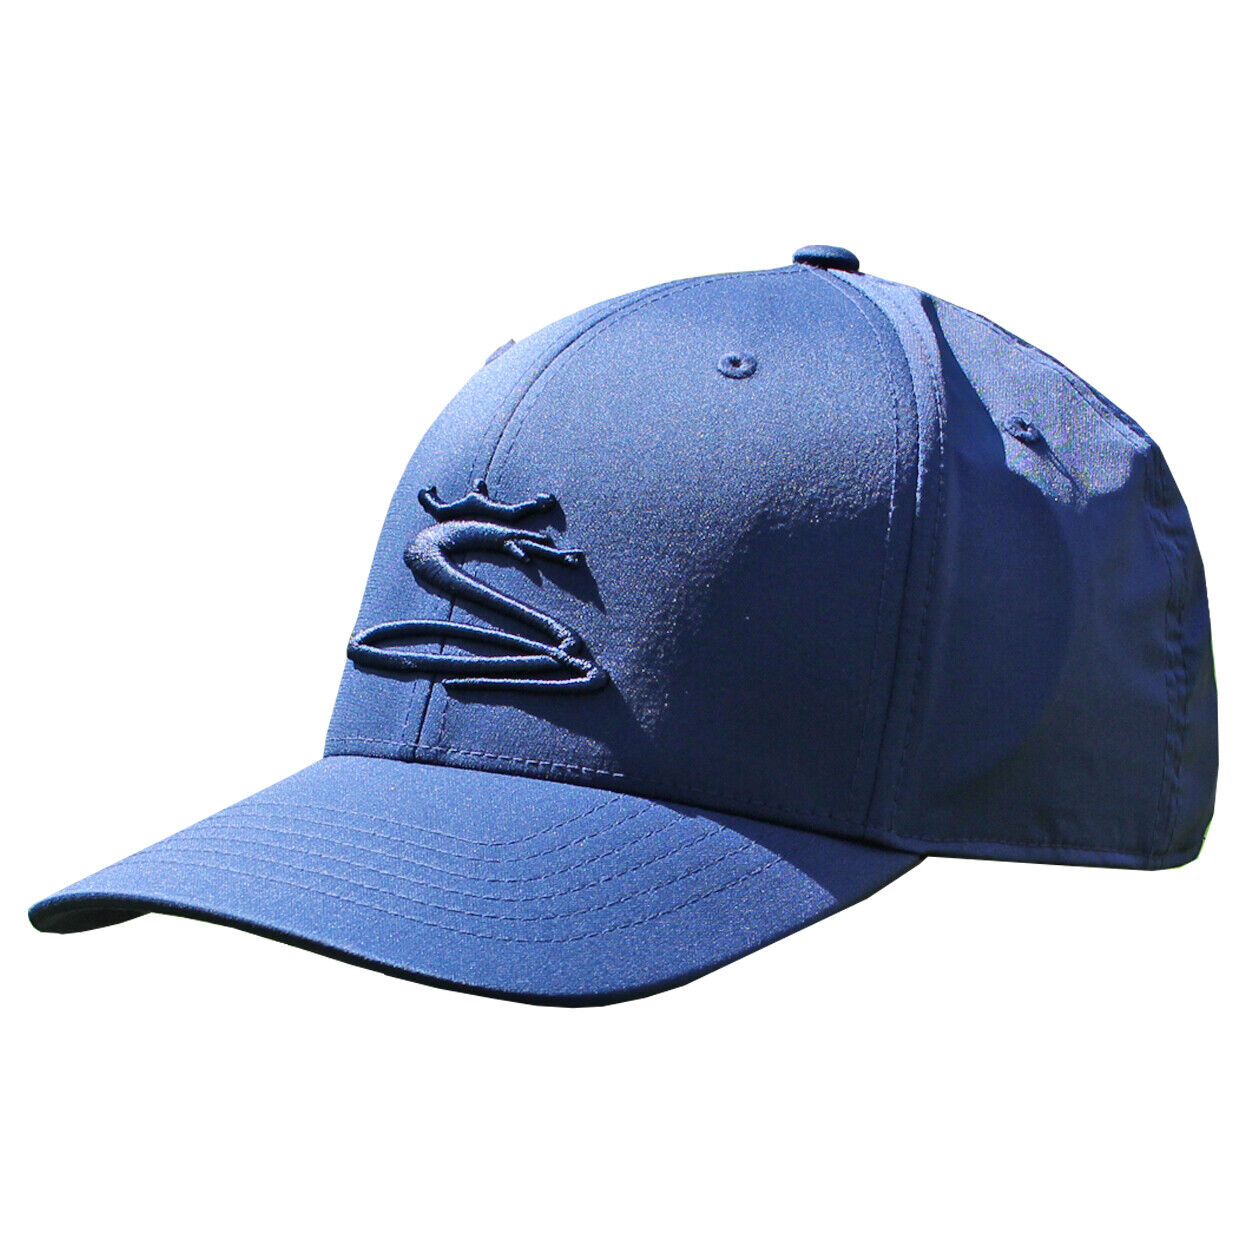 Cobra Golf Tour Snake 110 Snapback Adjustable Hat, Brand New